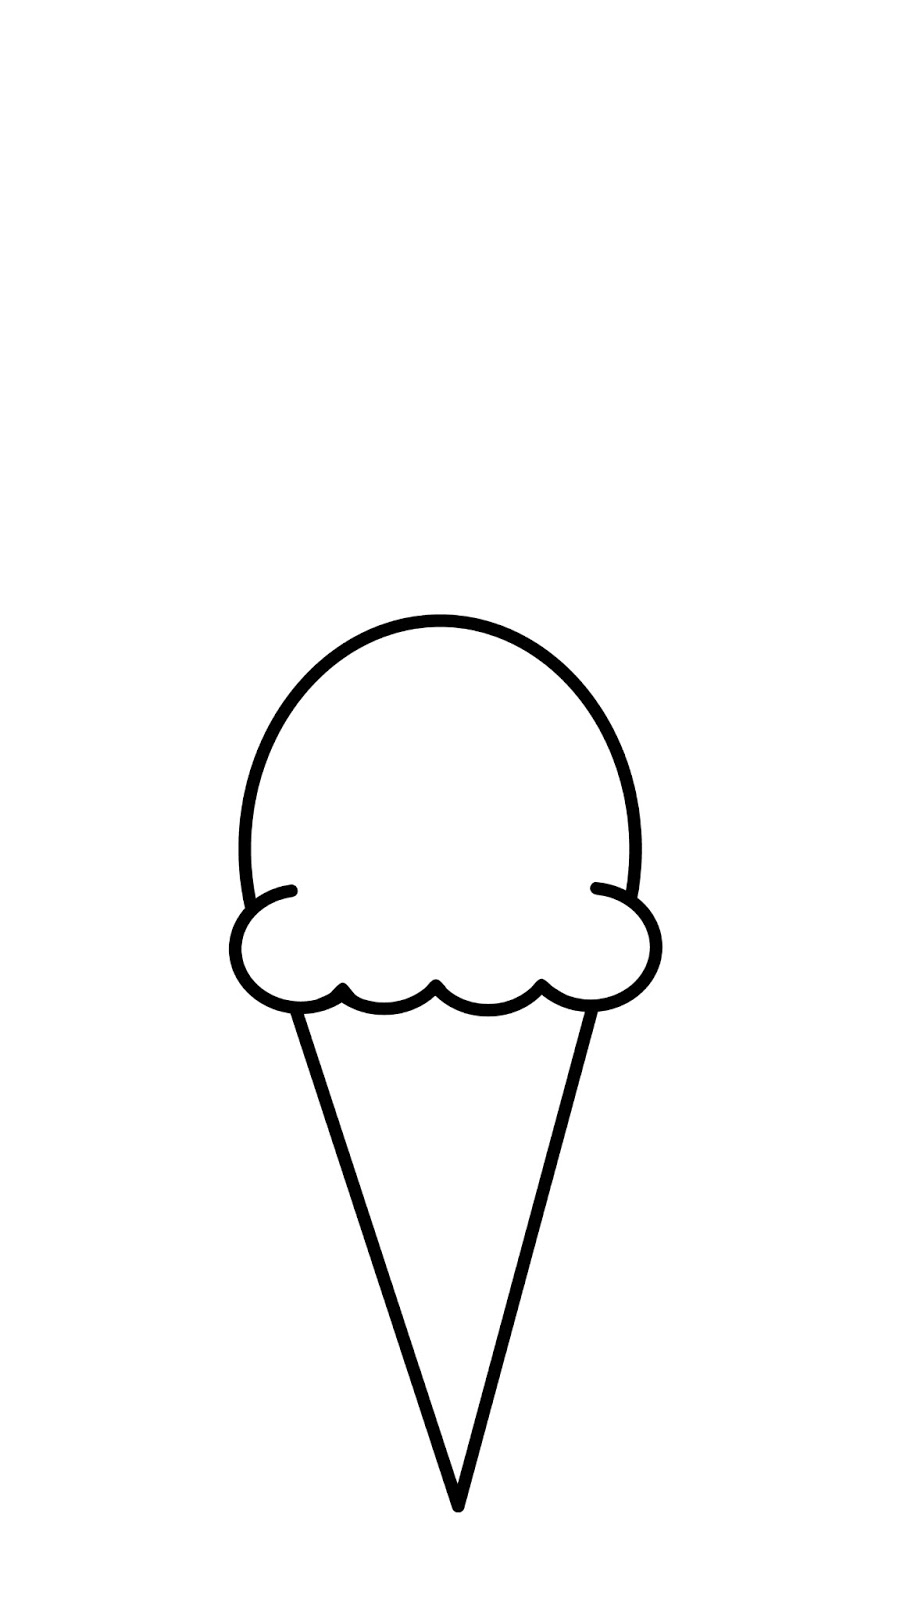 Cute N Kawaii: How To Draw A Kawaii Ice Cream